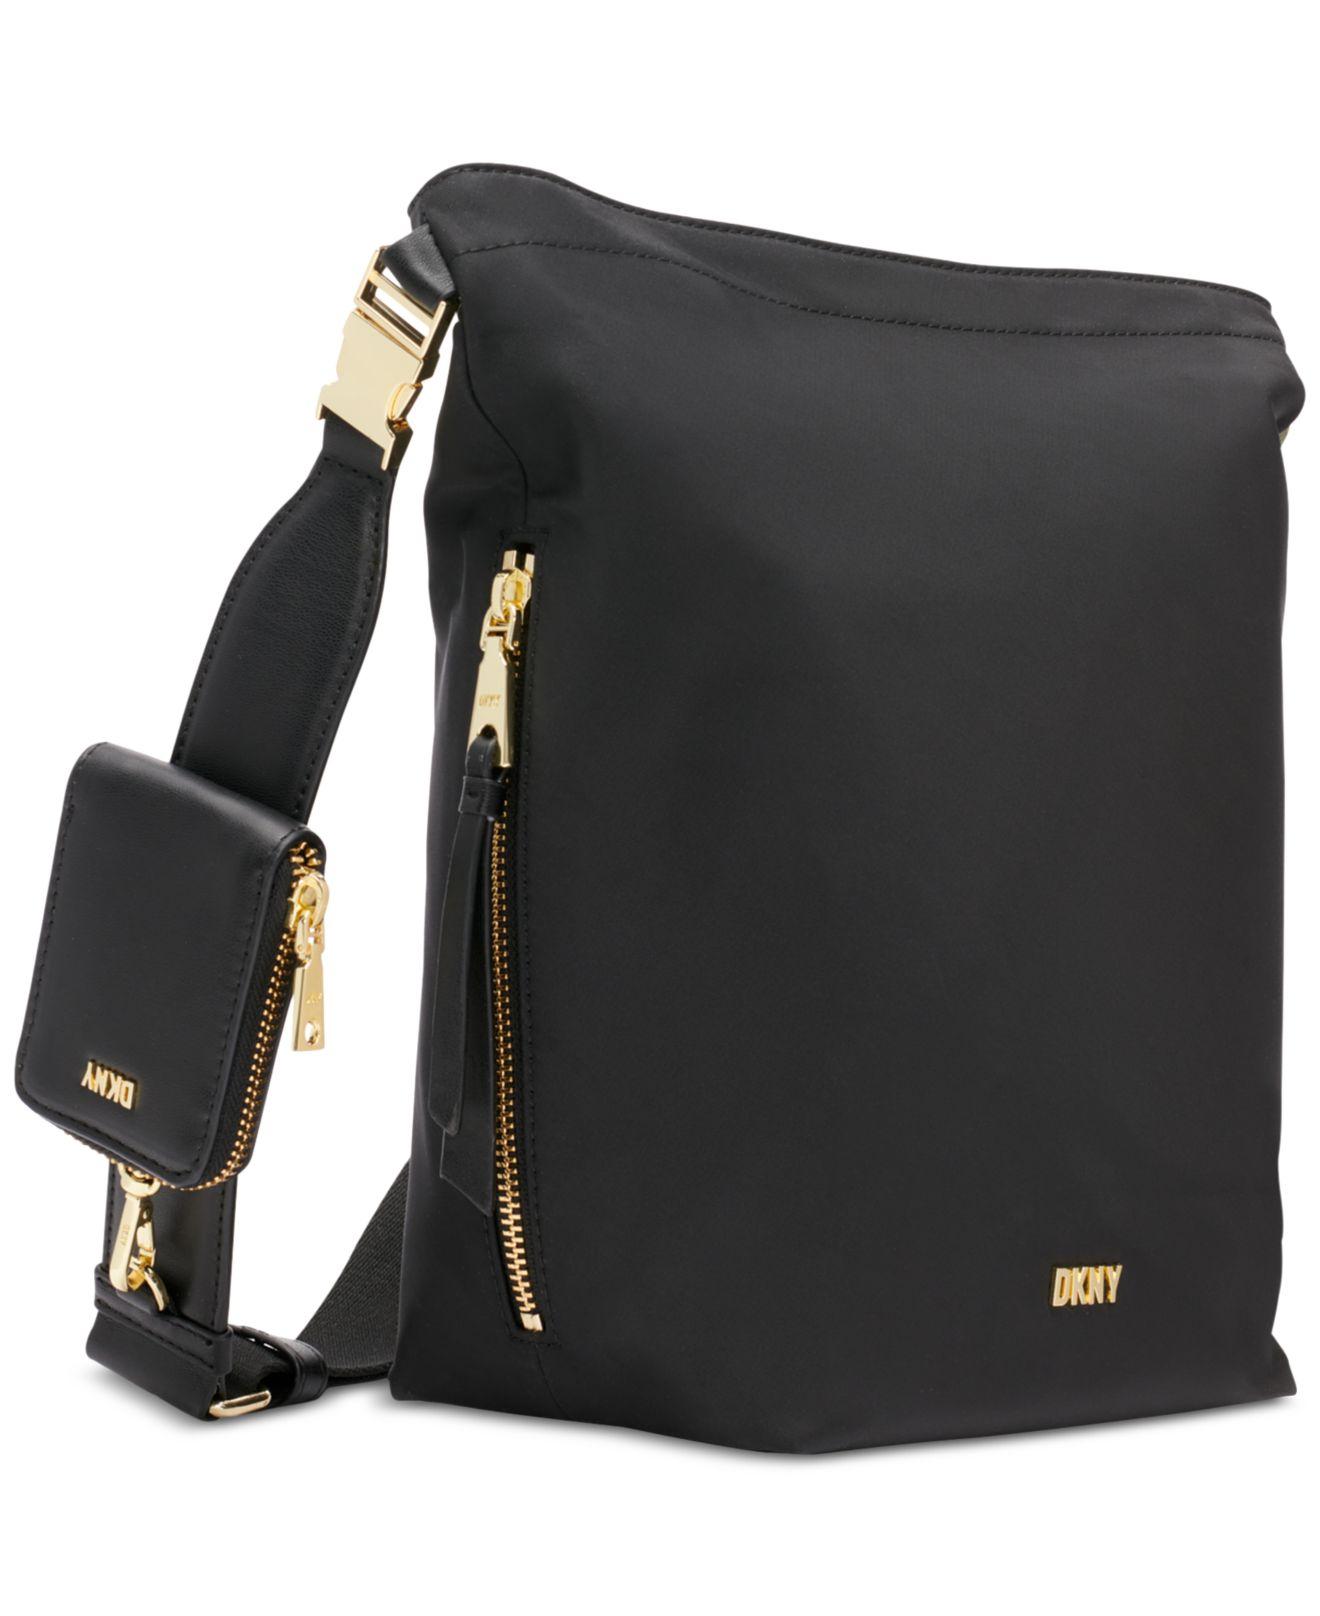 DKNY Women's Bryant Drawstring Bucket Bag - Black/Gold